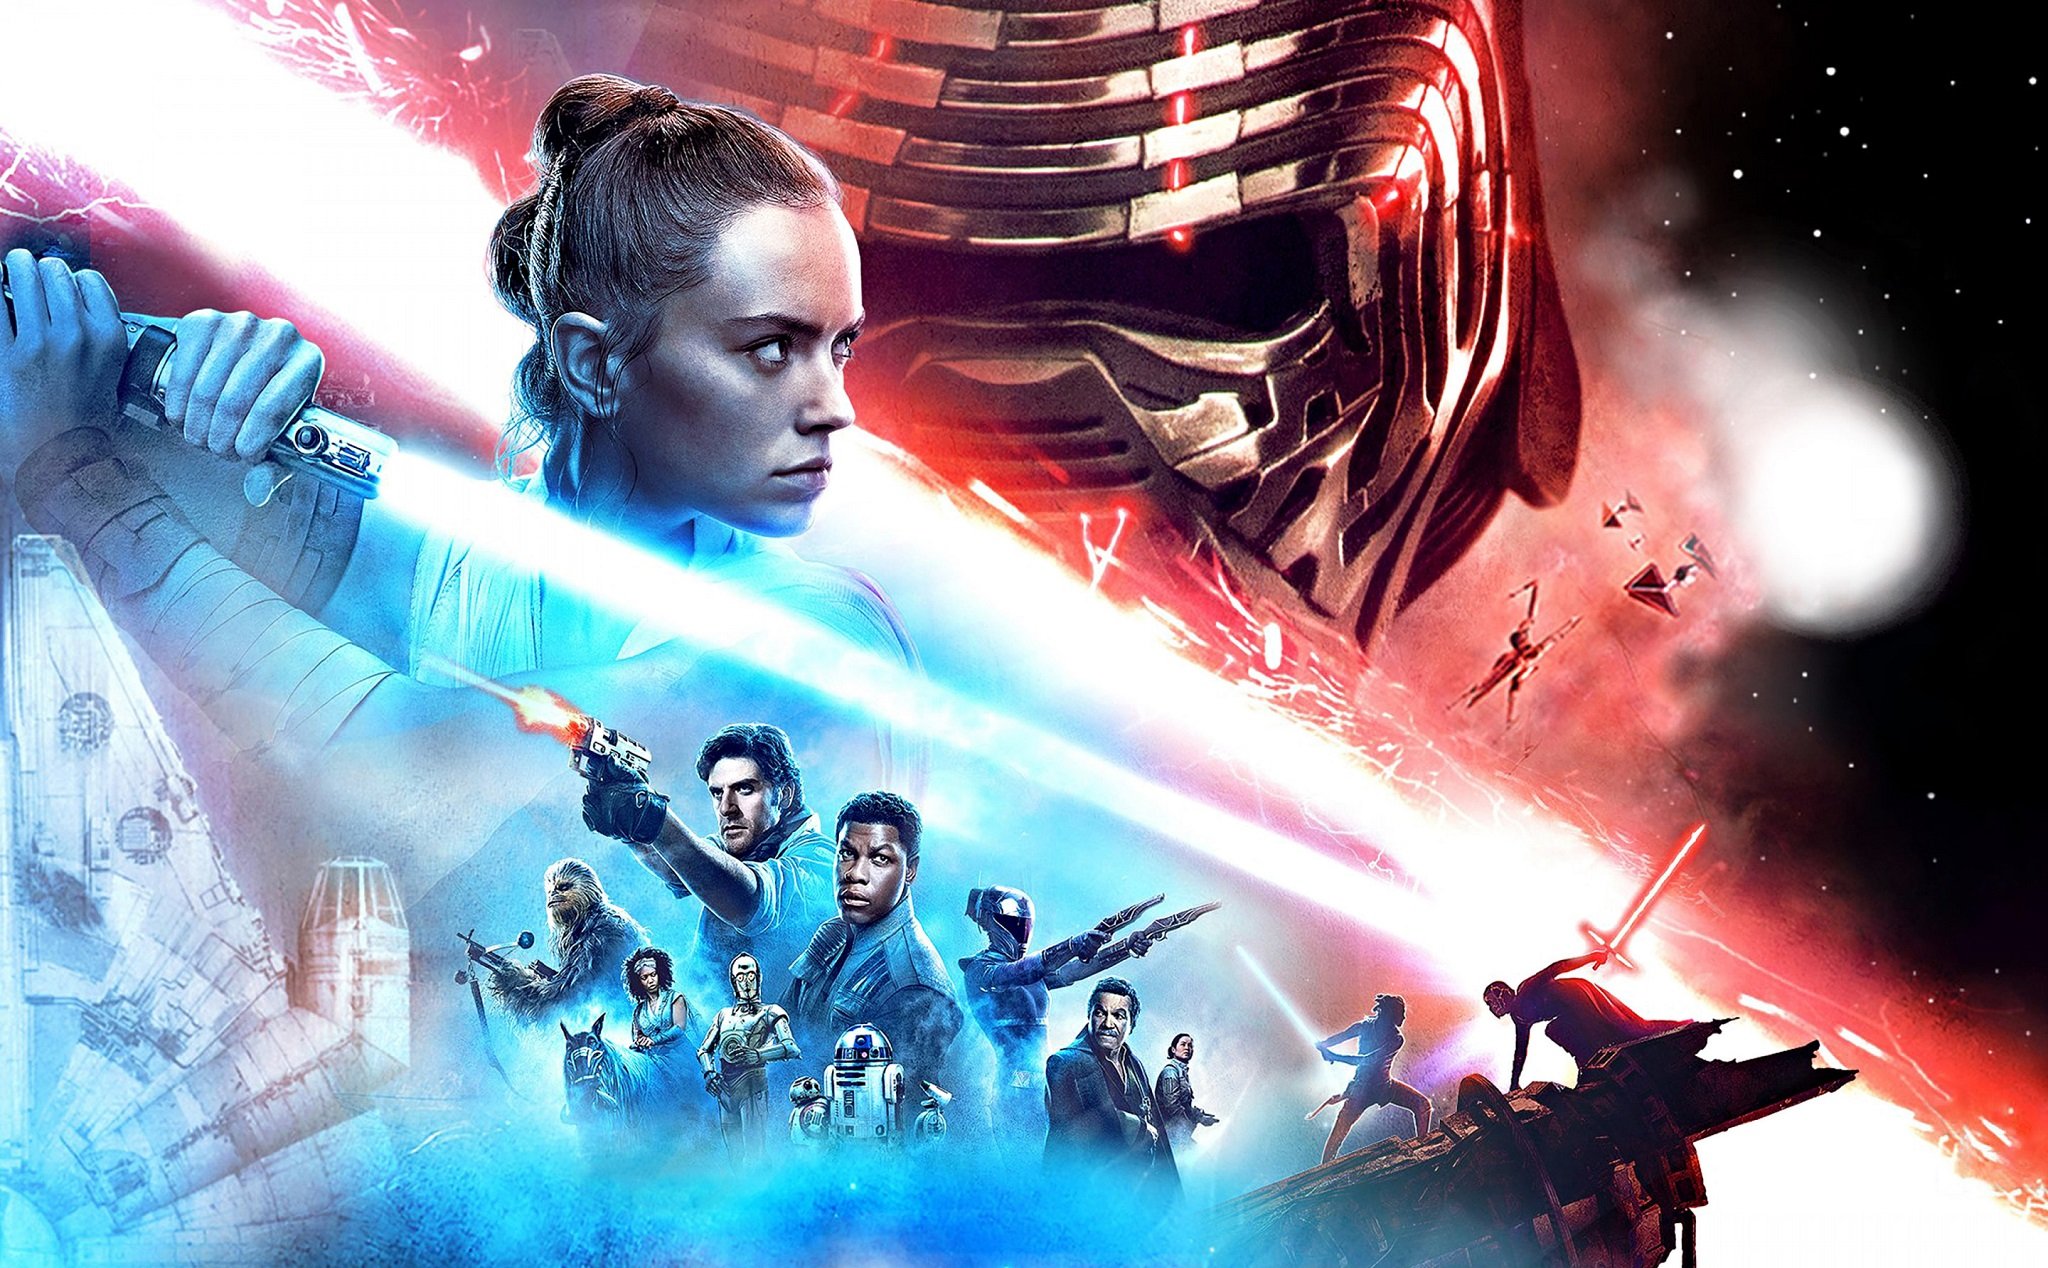 Tóm tắt 8 phần Star Wars để chuẩn bị xem Episode IX: The Rise of Skywalker dễ hiểu hơn